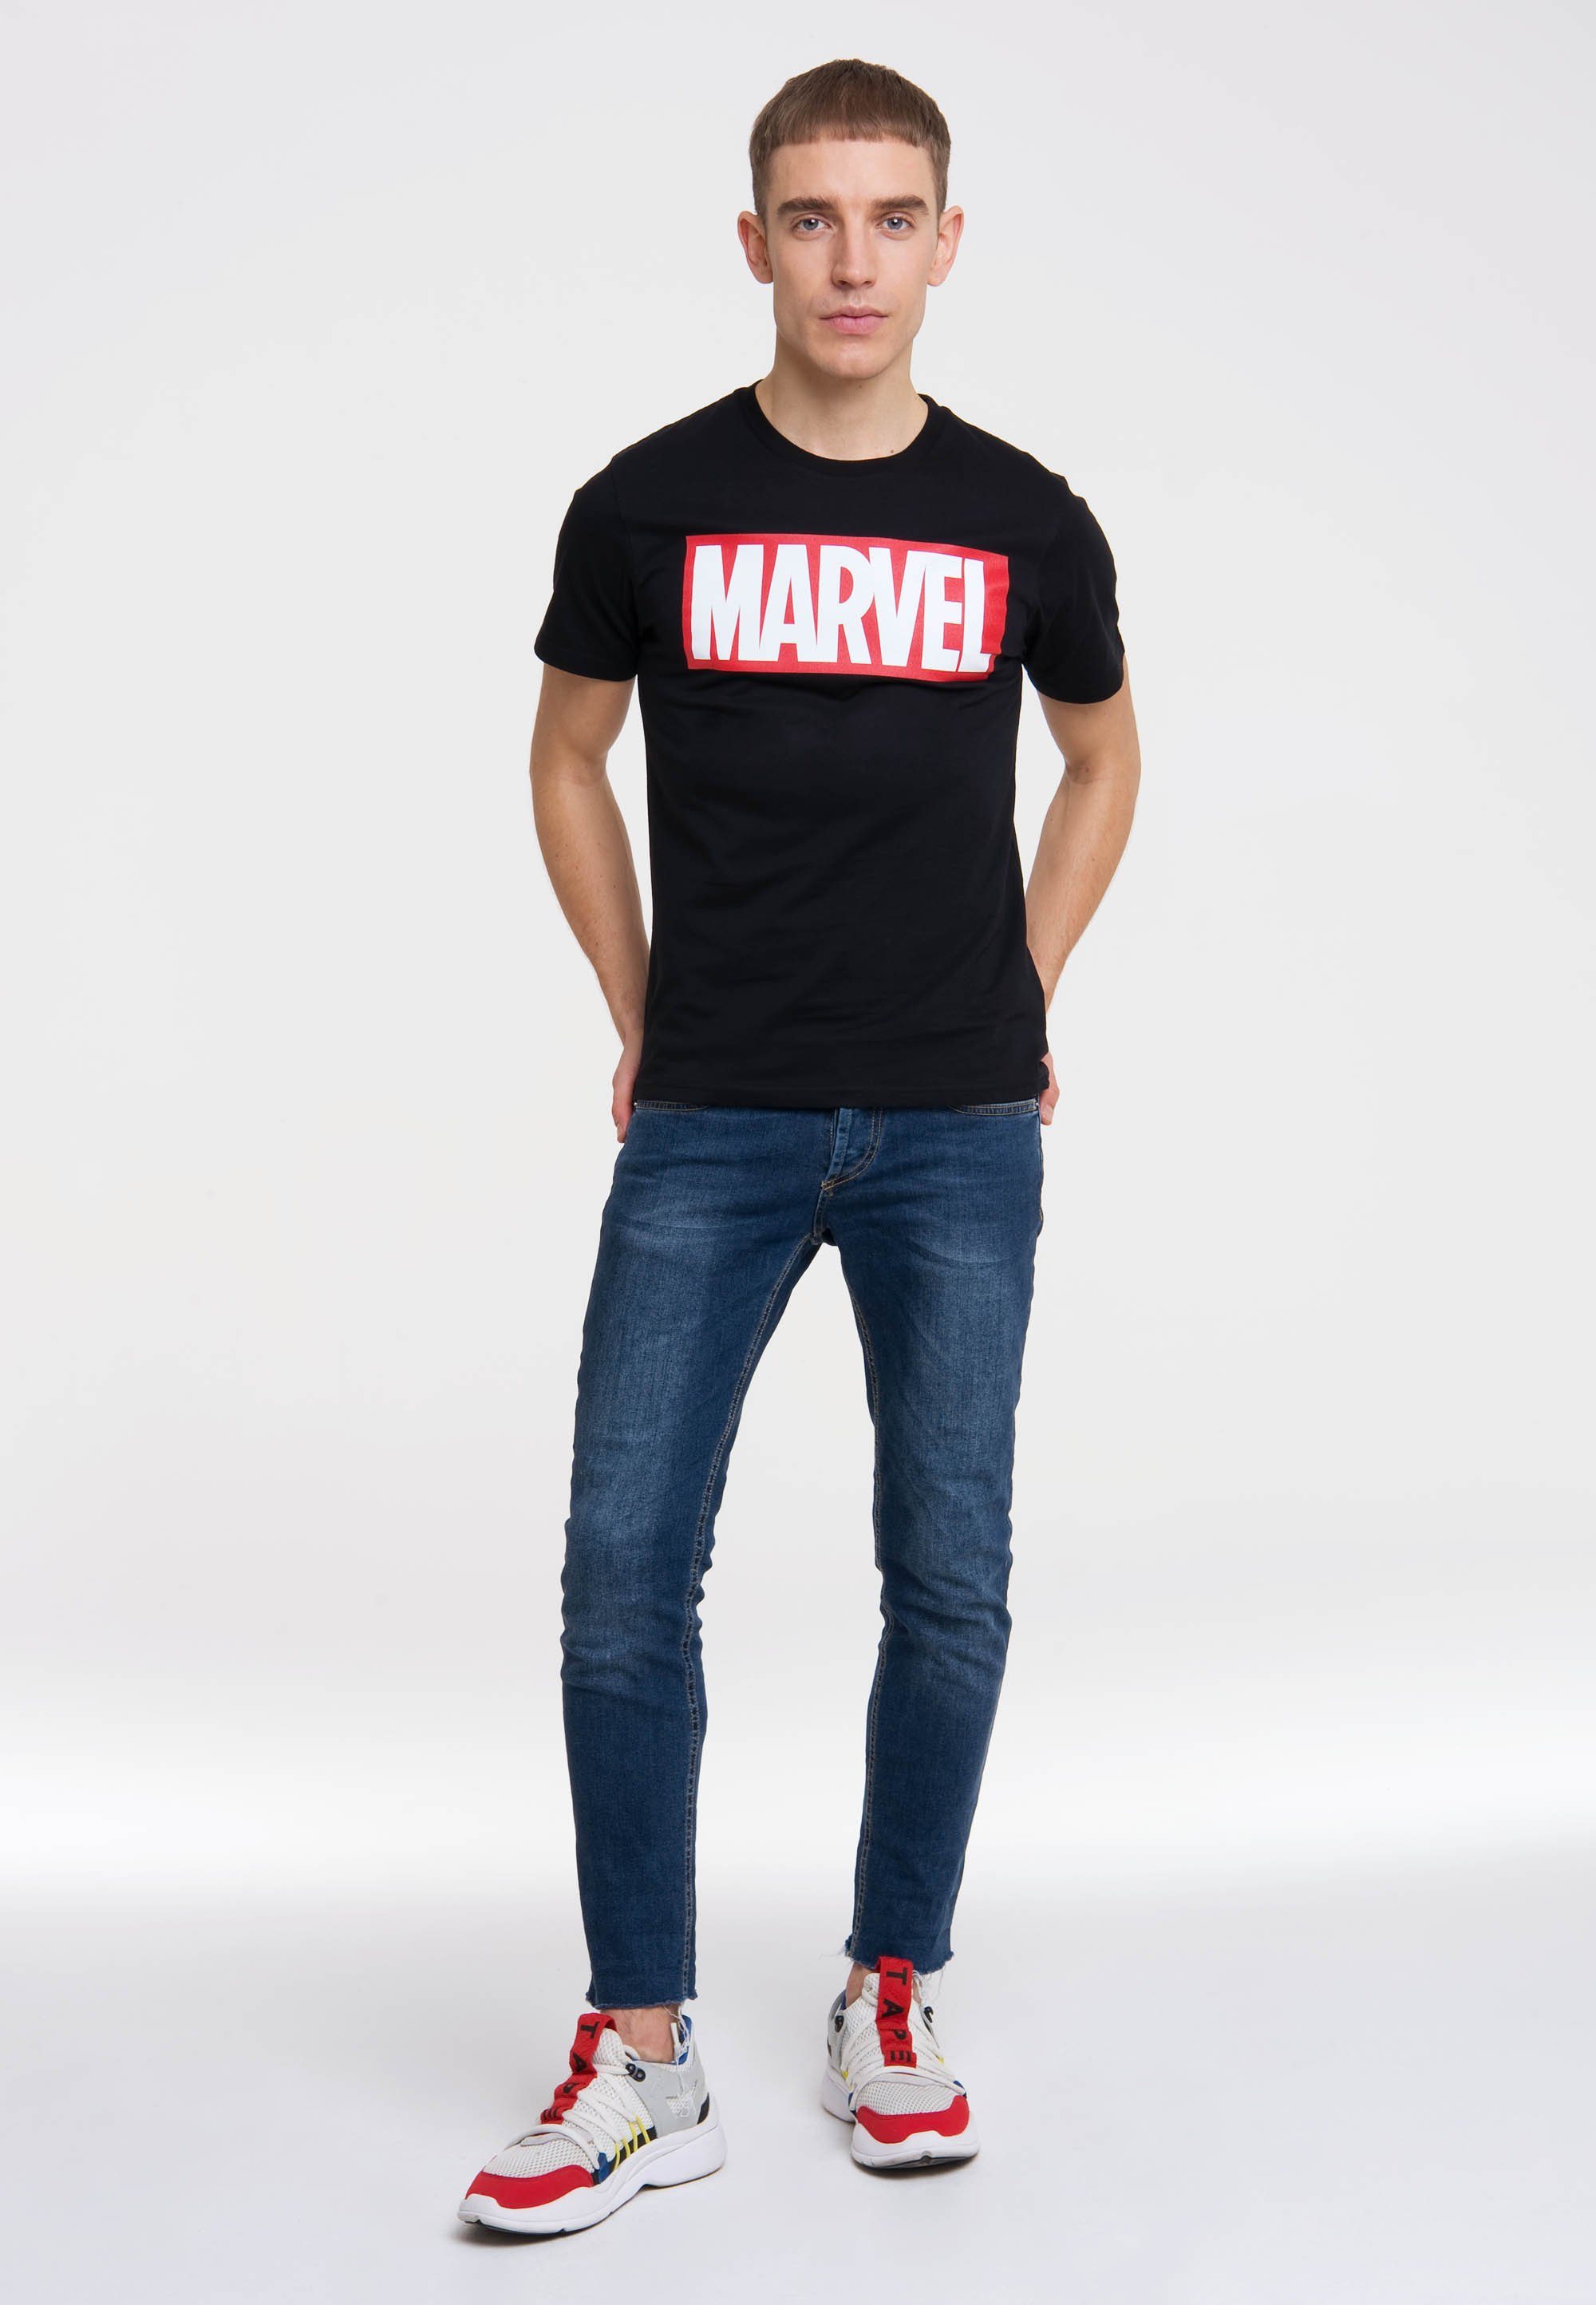 Logo-Frontdruck Logo Marvel LOGOSHIRT Marvel T-Shirt mit